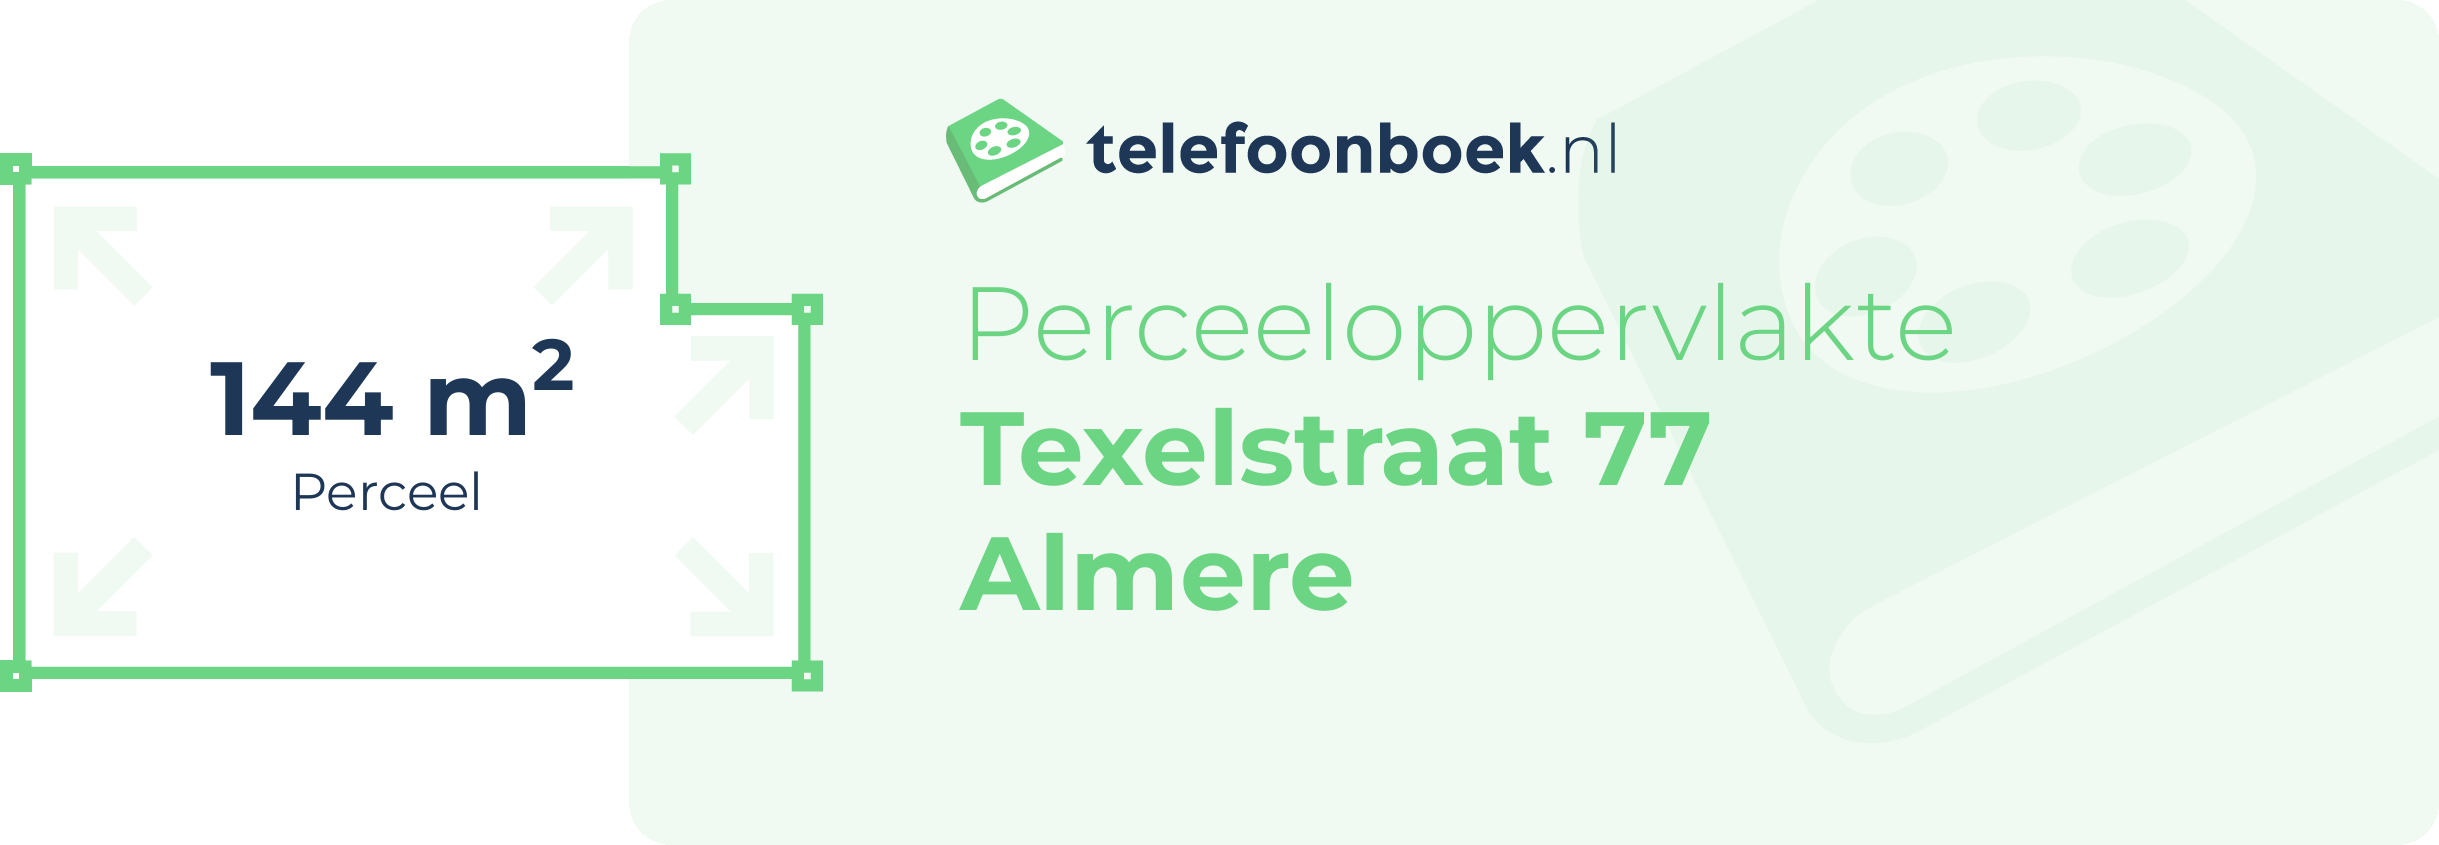 Perceeloppervlakte Texelstraat 77 Almere